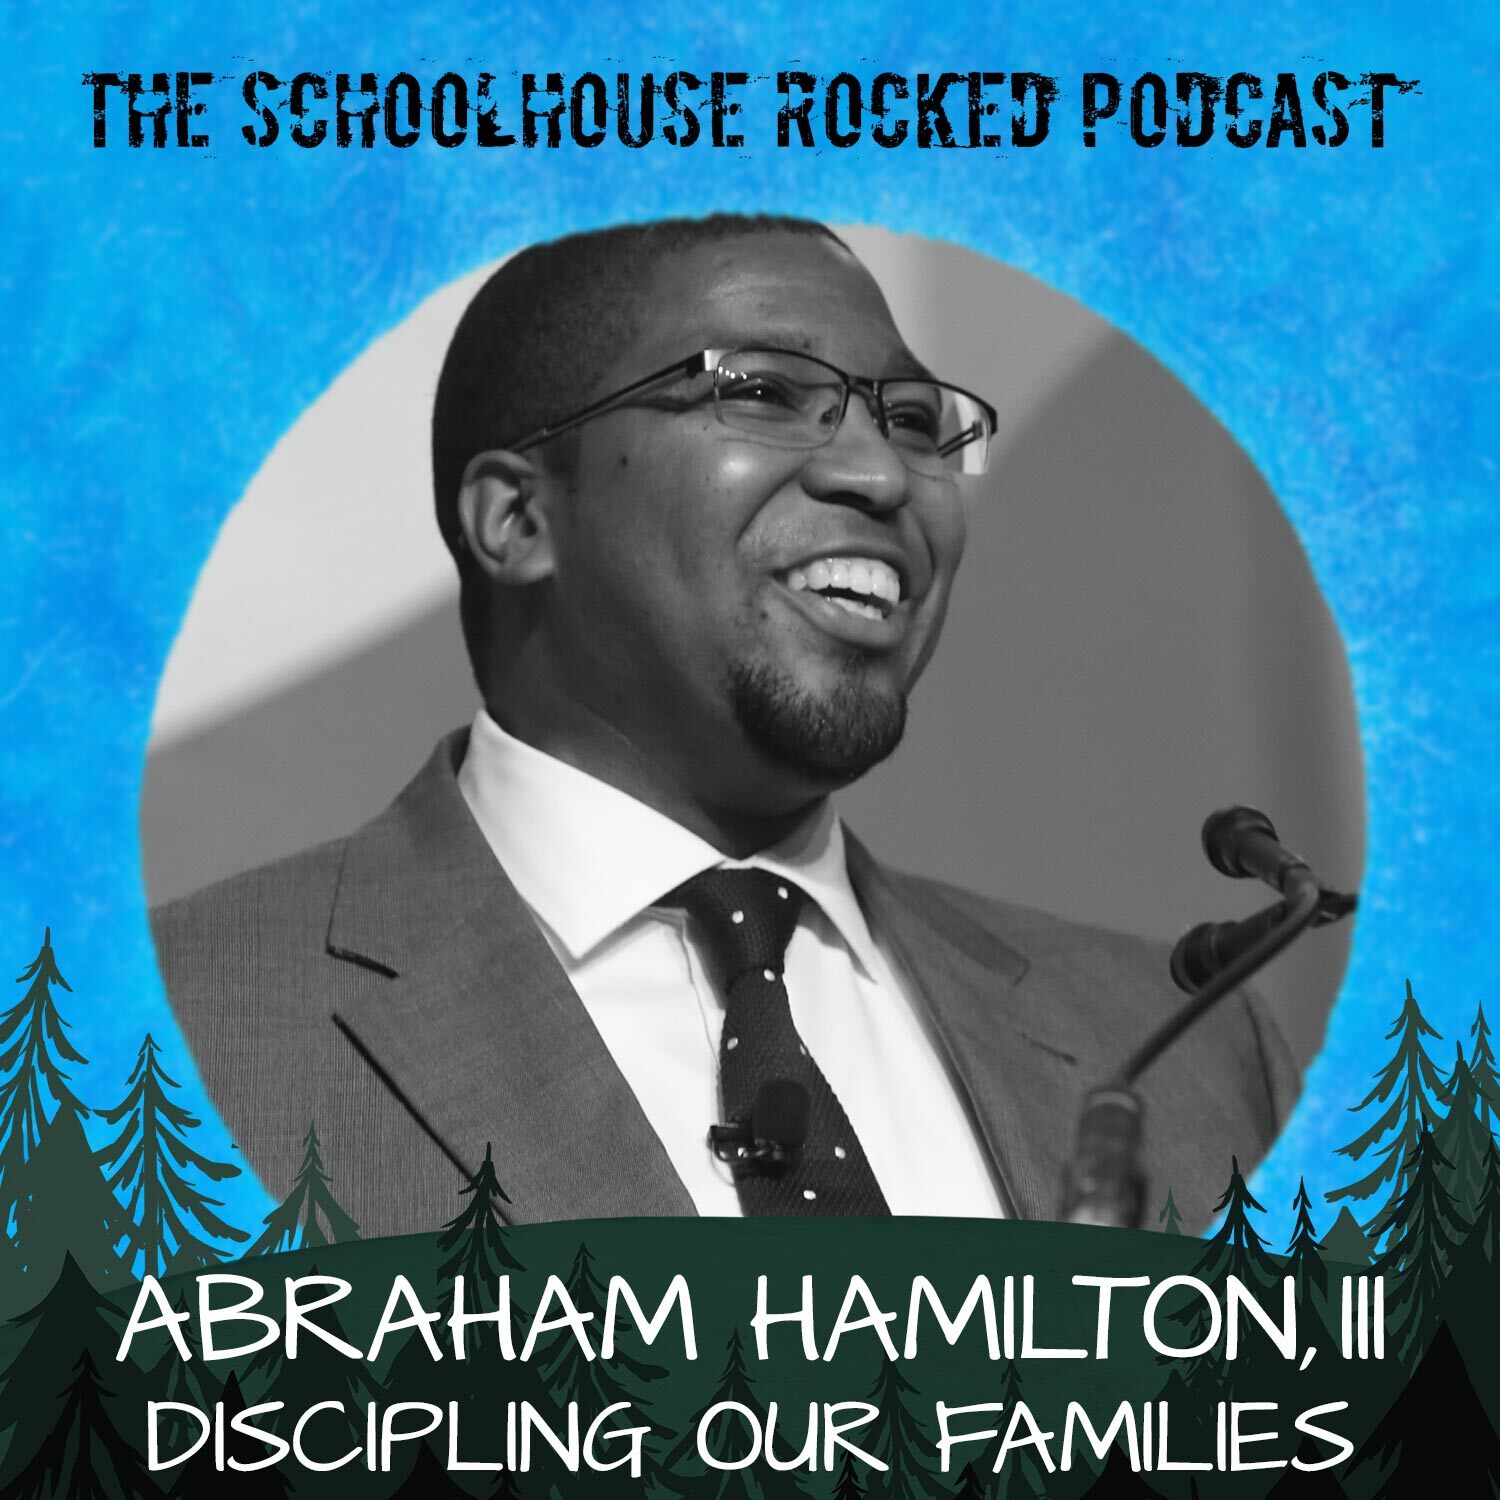 Interview with Abraham Hamilton, III - Family Discipleship